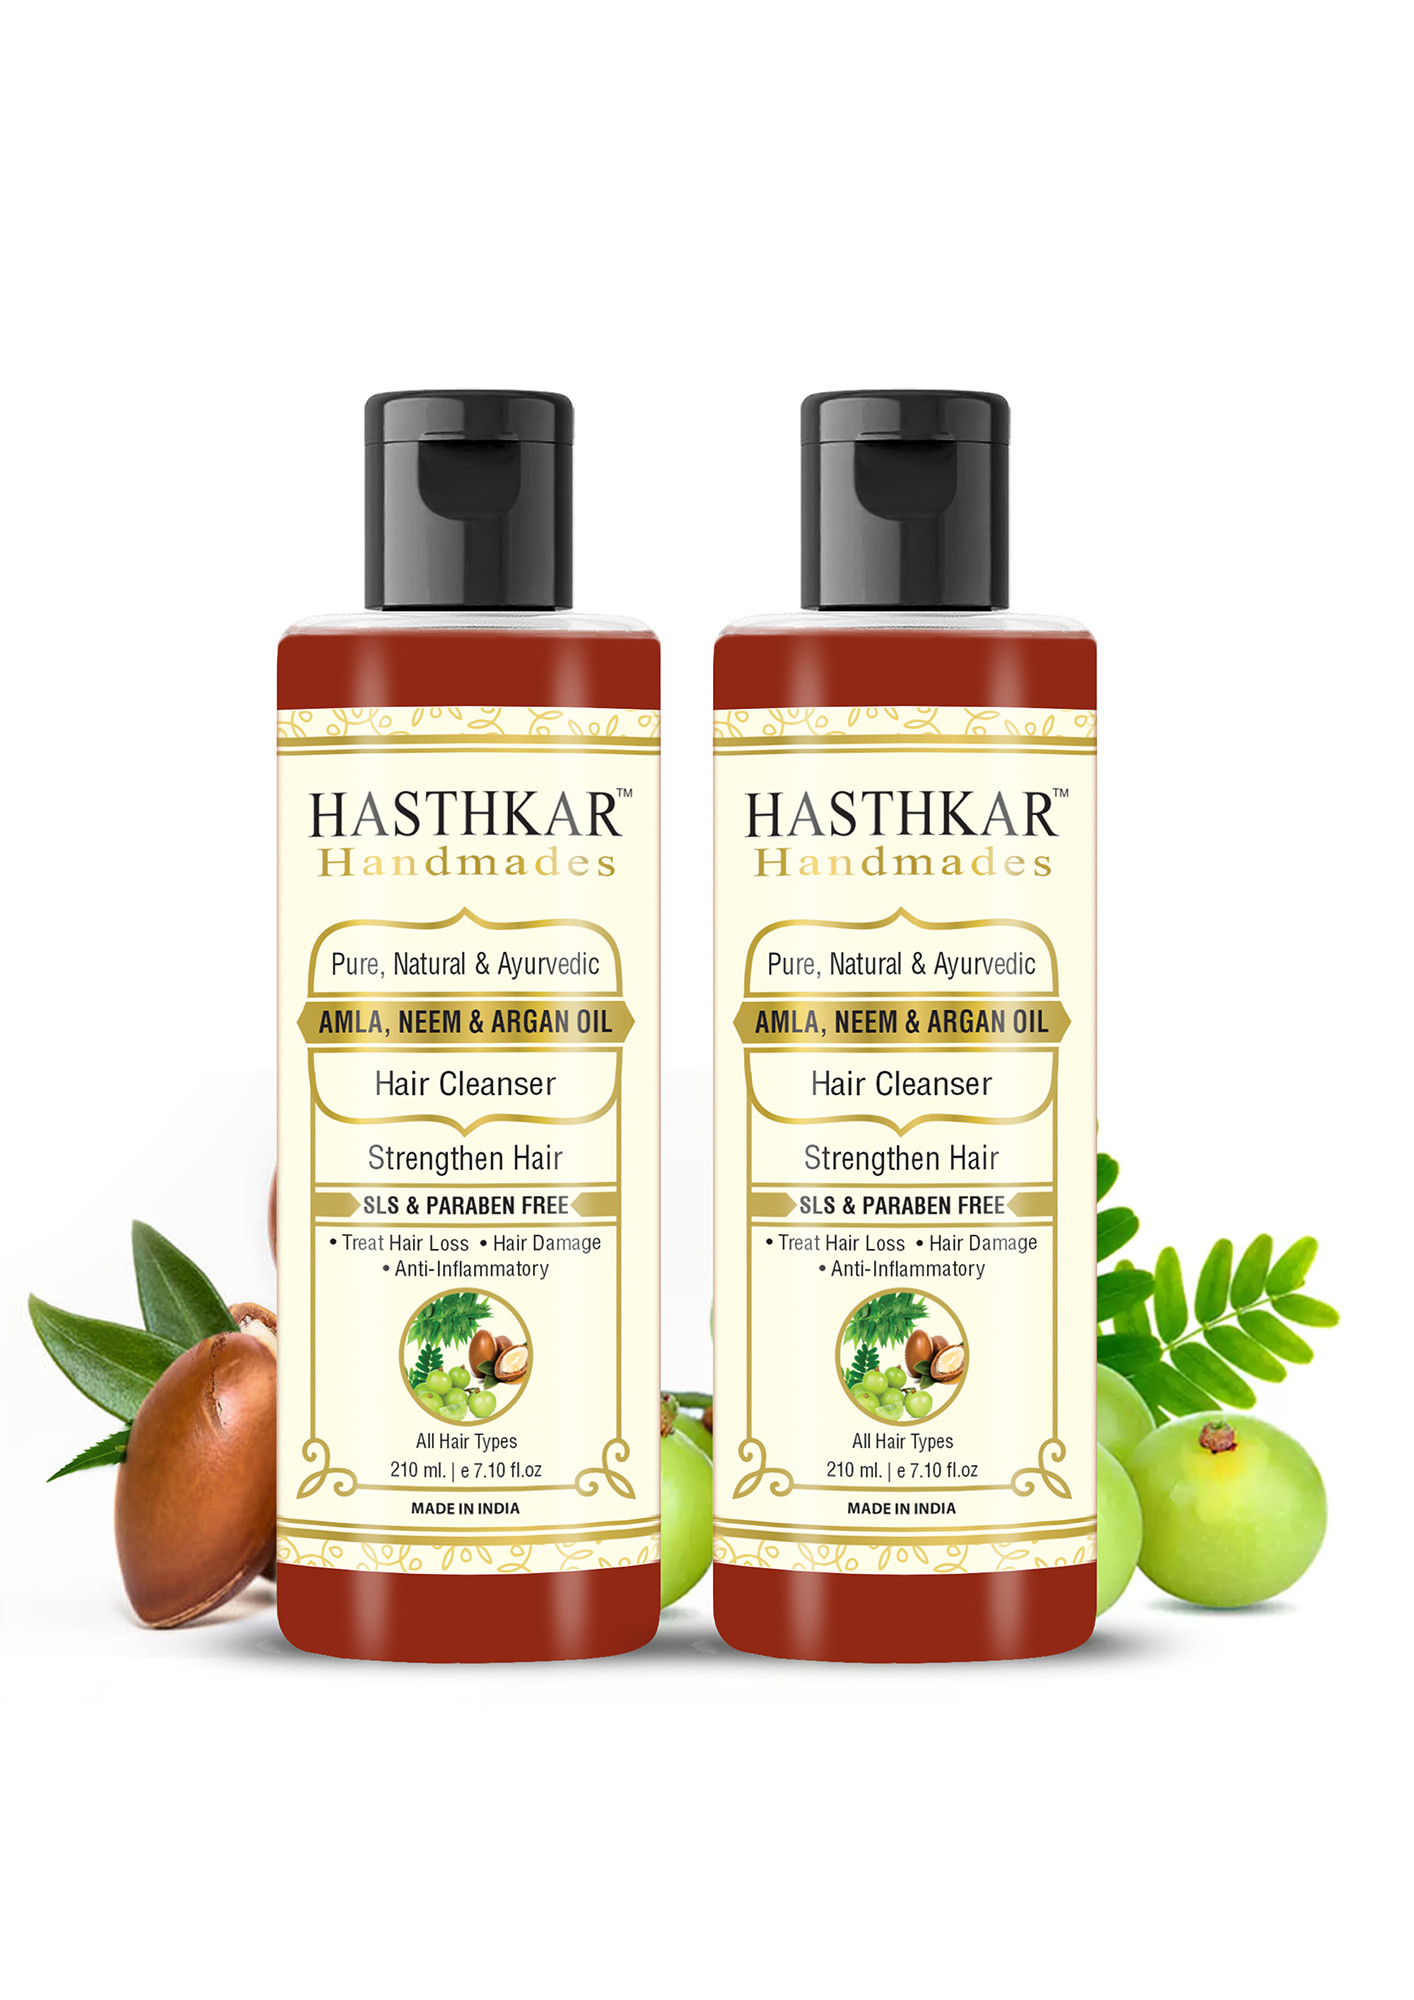 Hasthkar Handmades SLS Paraben Free Amla Neem & Argan Oil Hair Shampoo for Men & Women 210ml Pack of 2